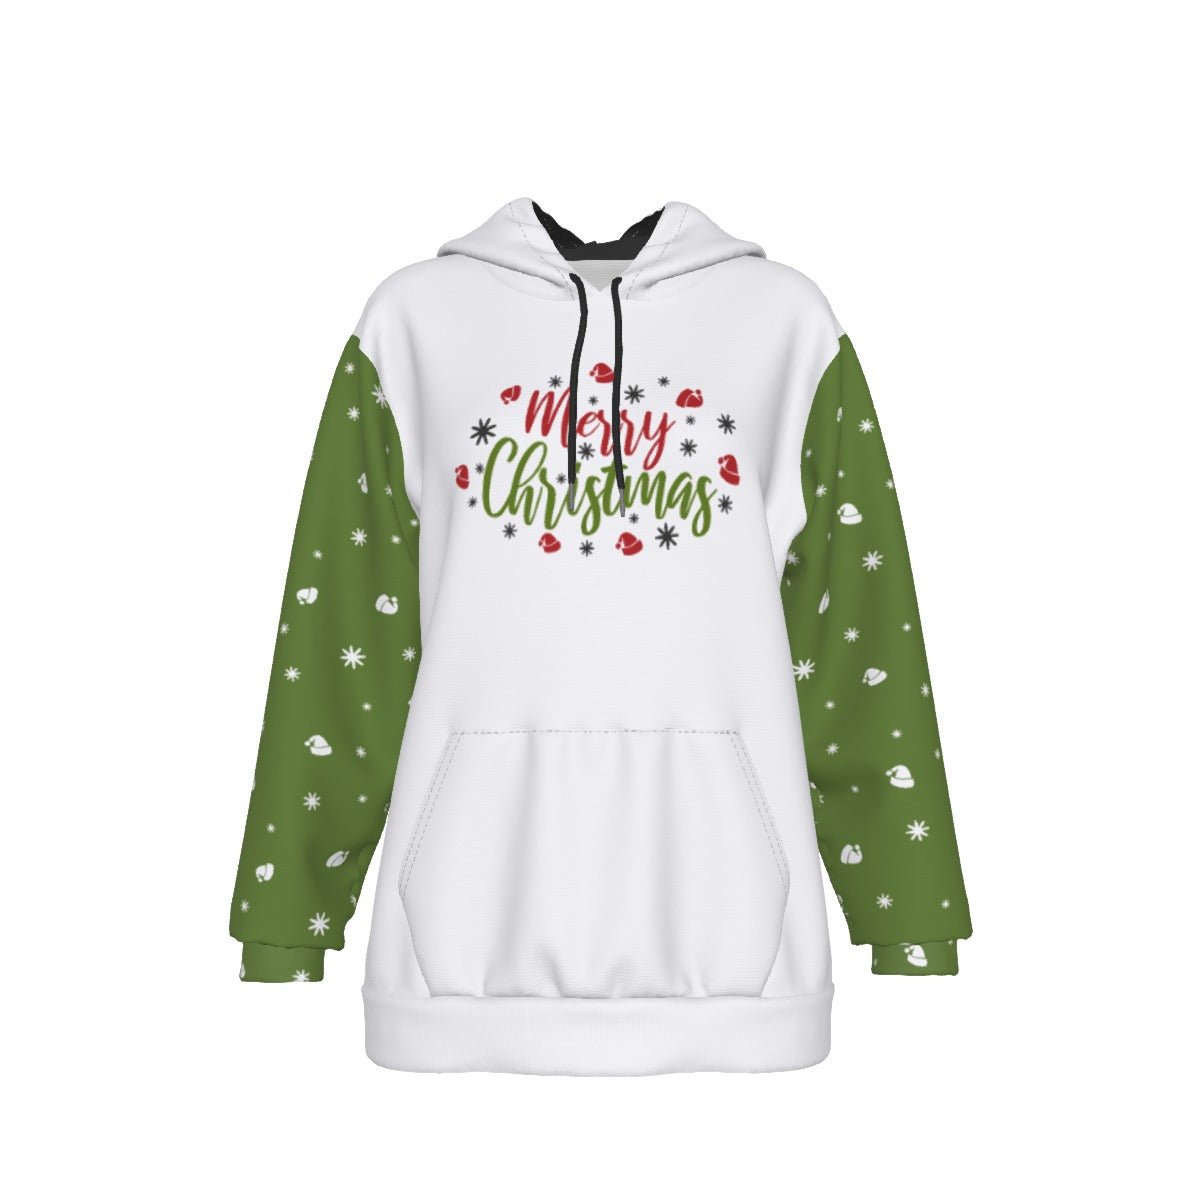 Women's Fleece Christmas Hoodie - Merry Christmas - Green Sleeves - Festive Style